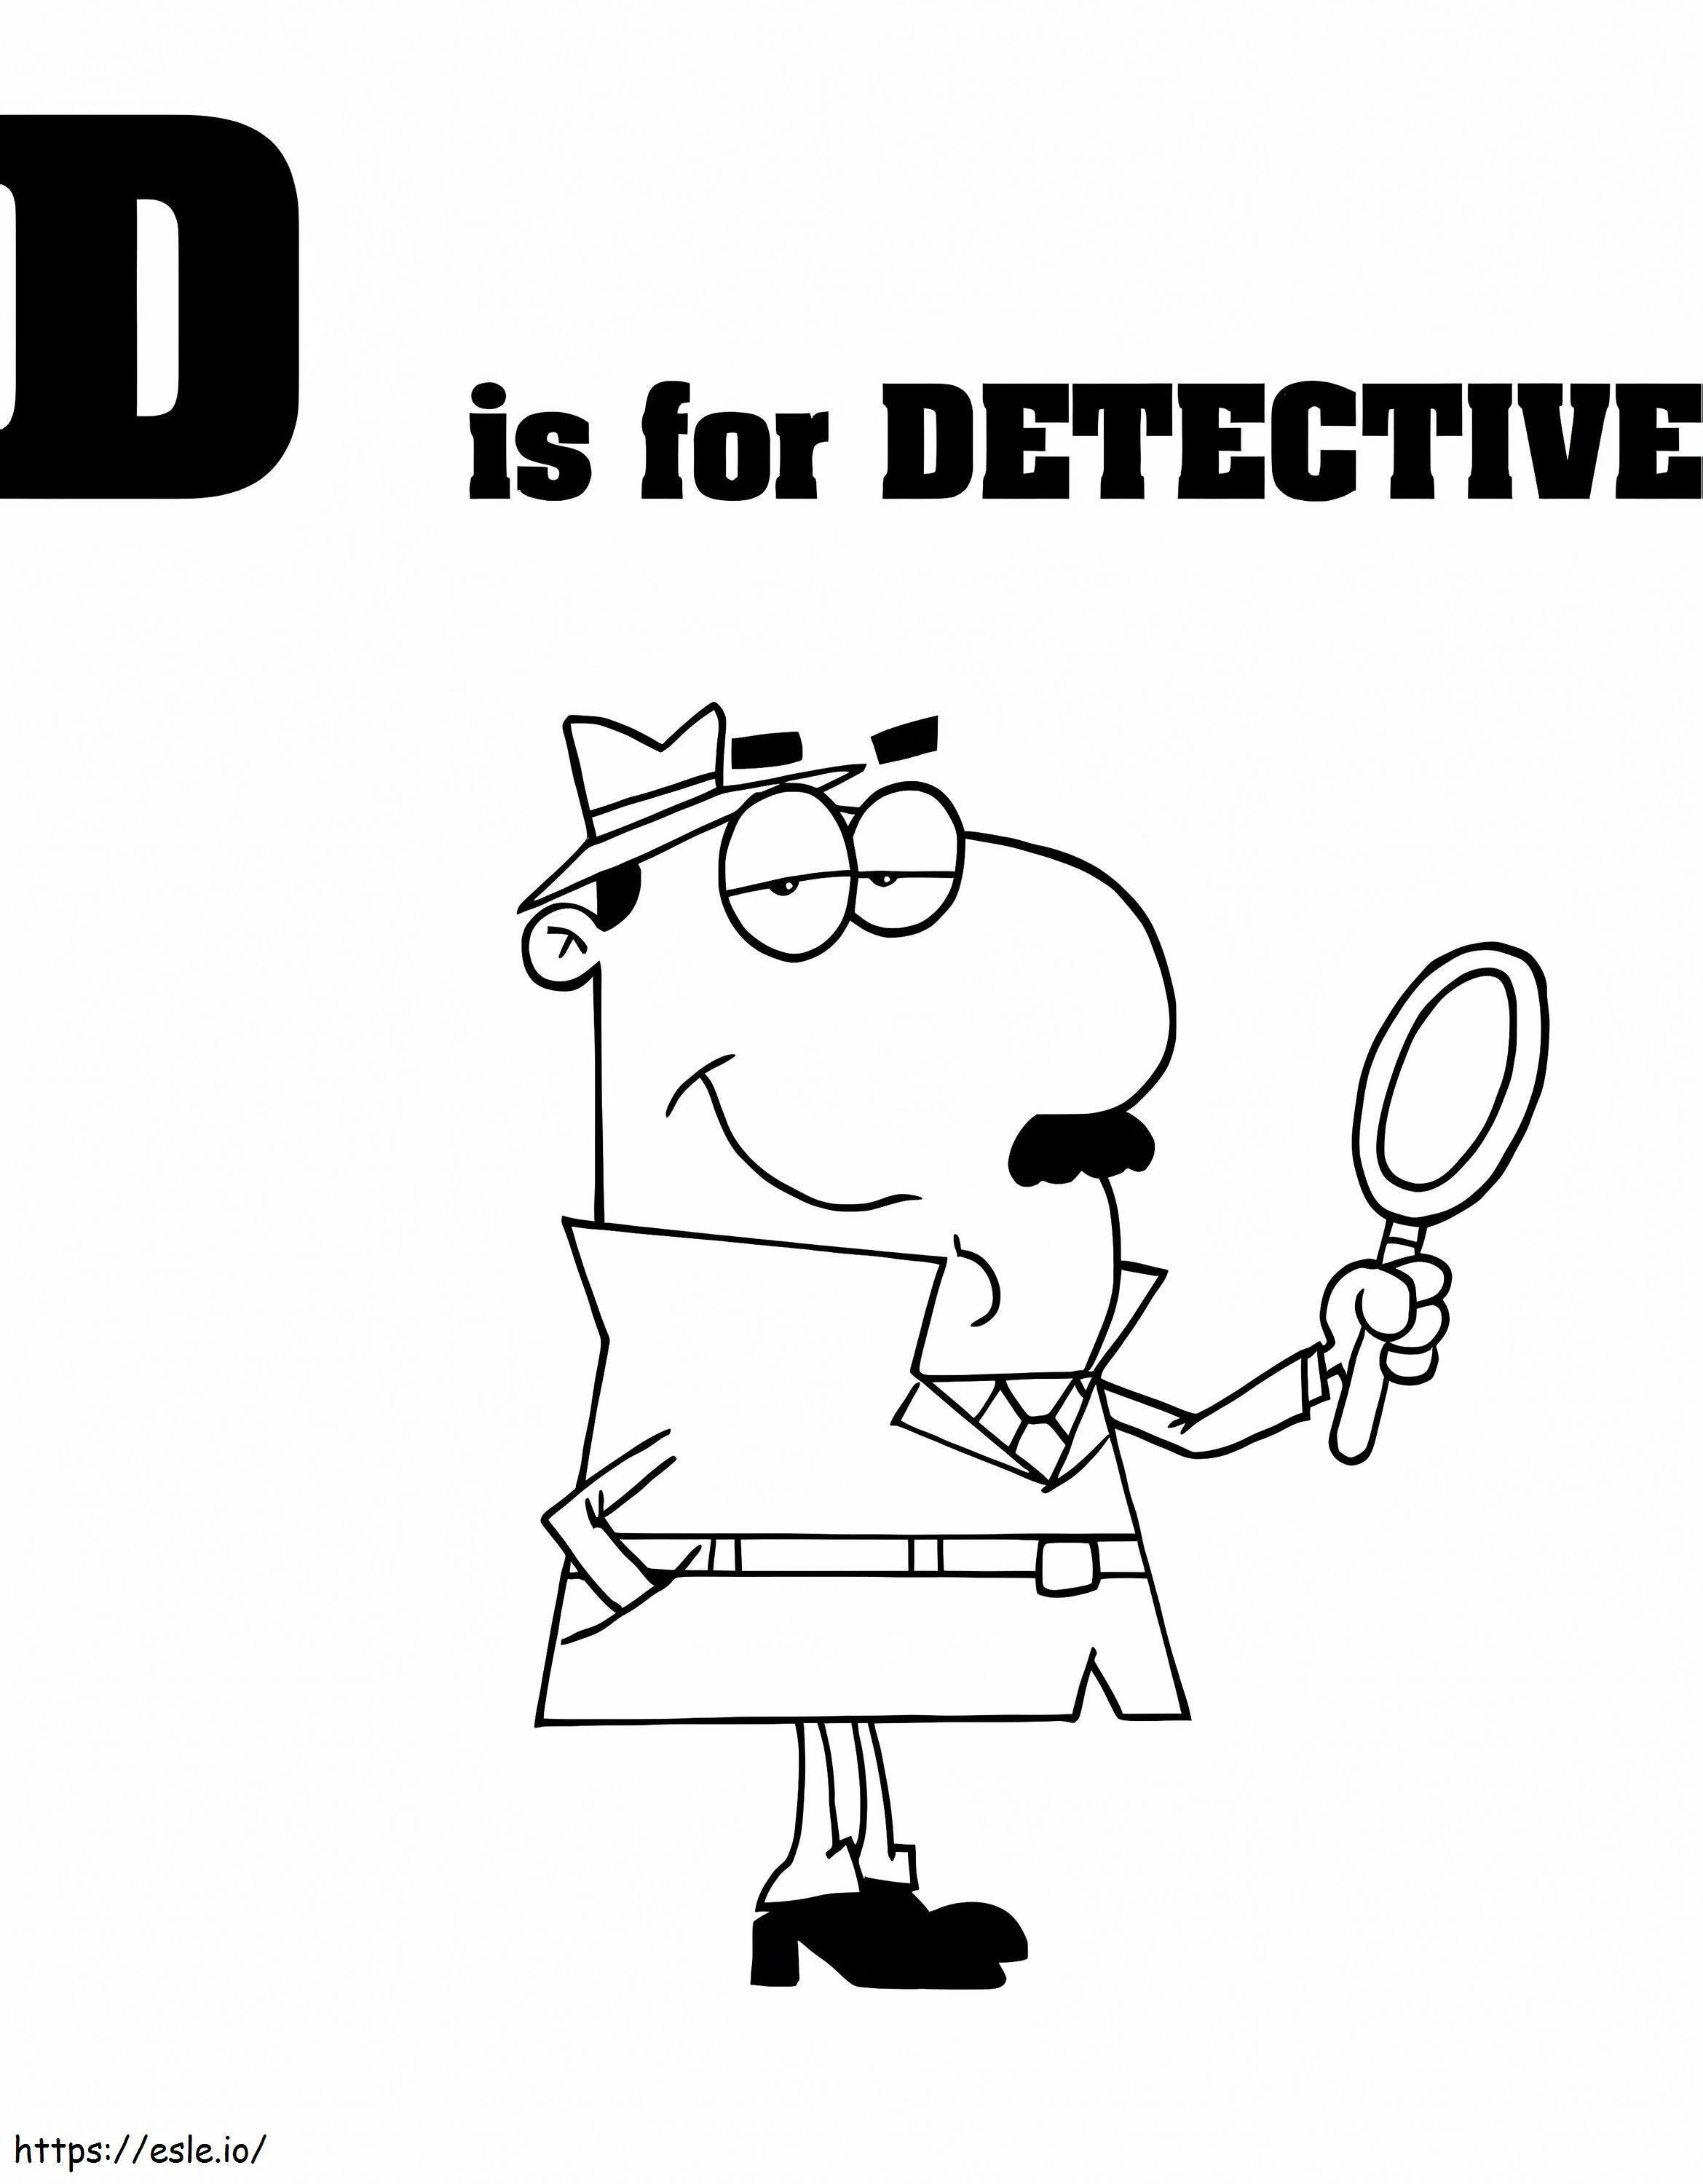 Detective Letter D coloring page